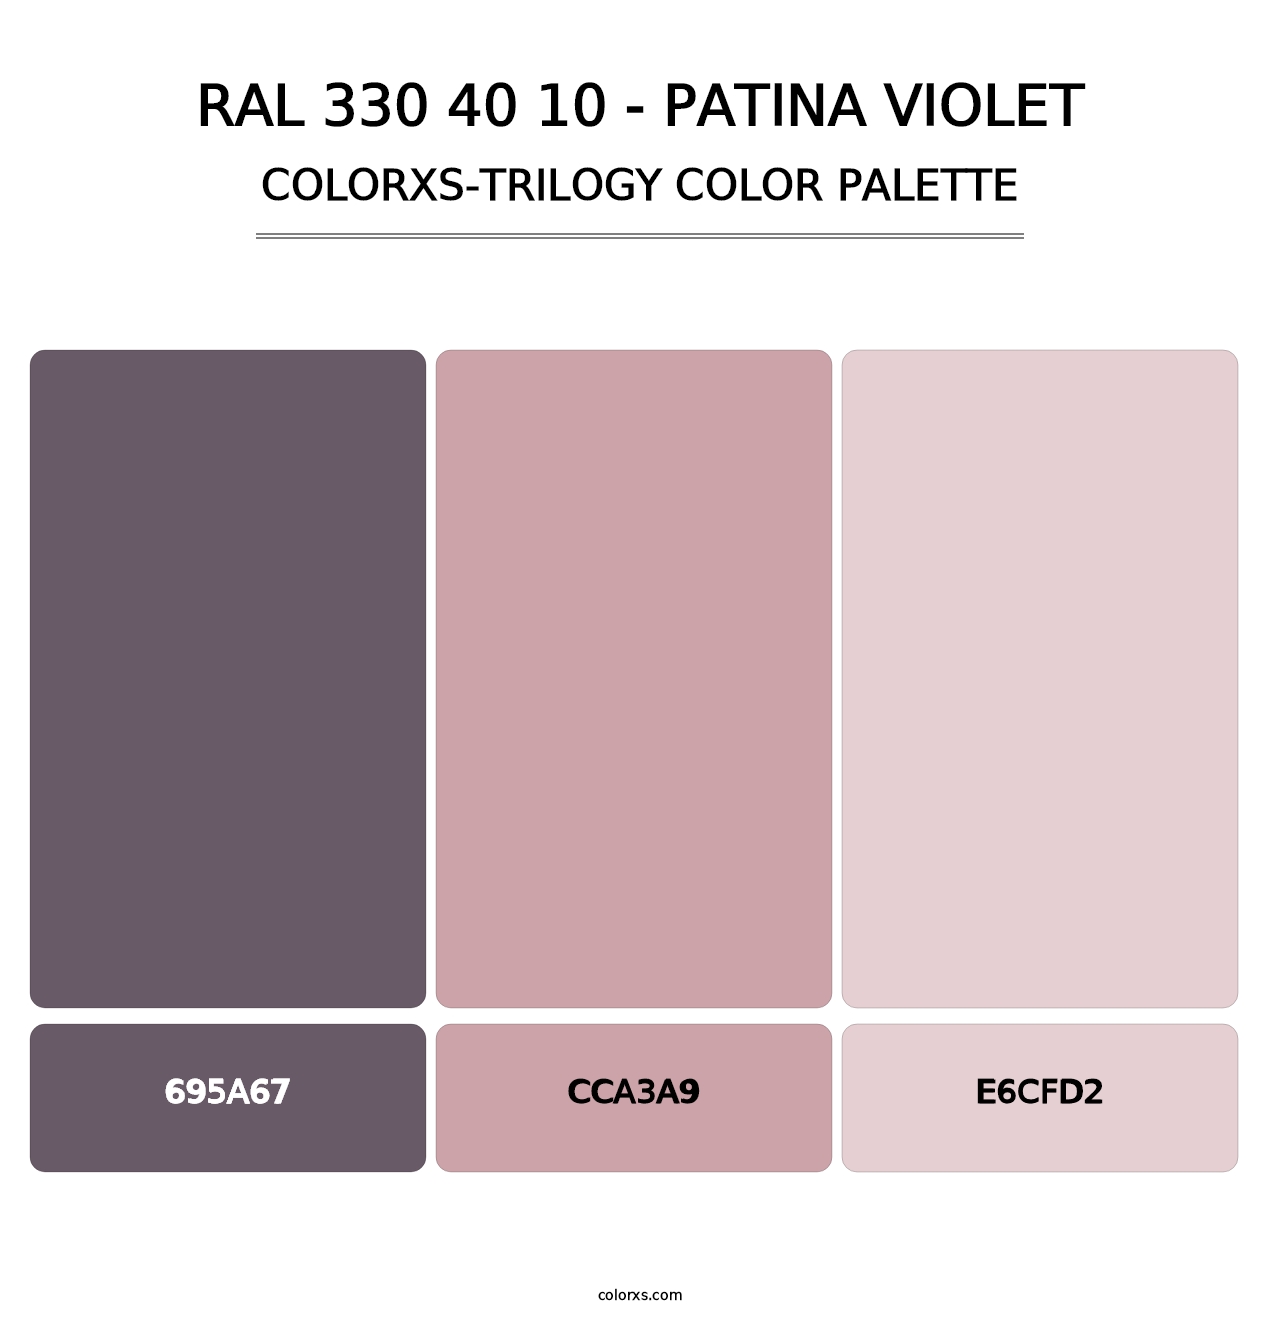 RAL 330 40 10 - Patina Violet - Colorxs Trilogy Palette